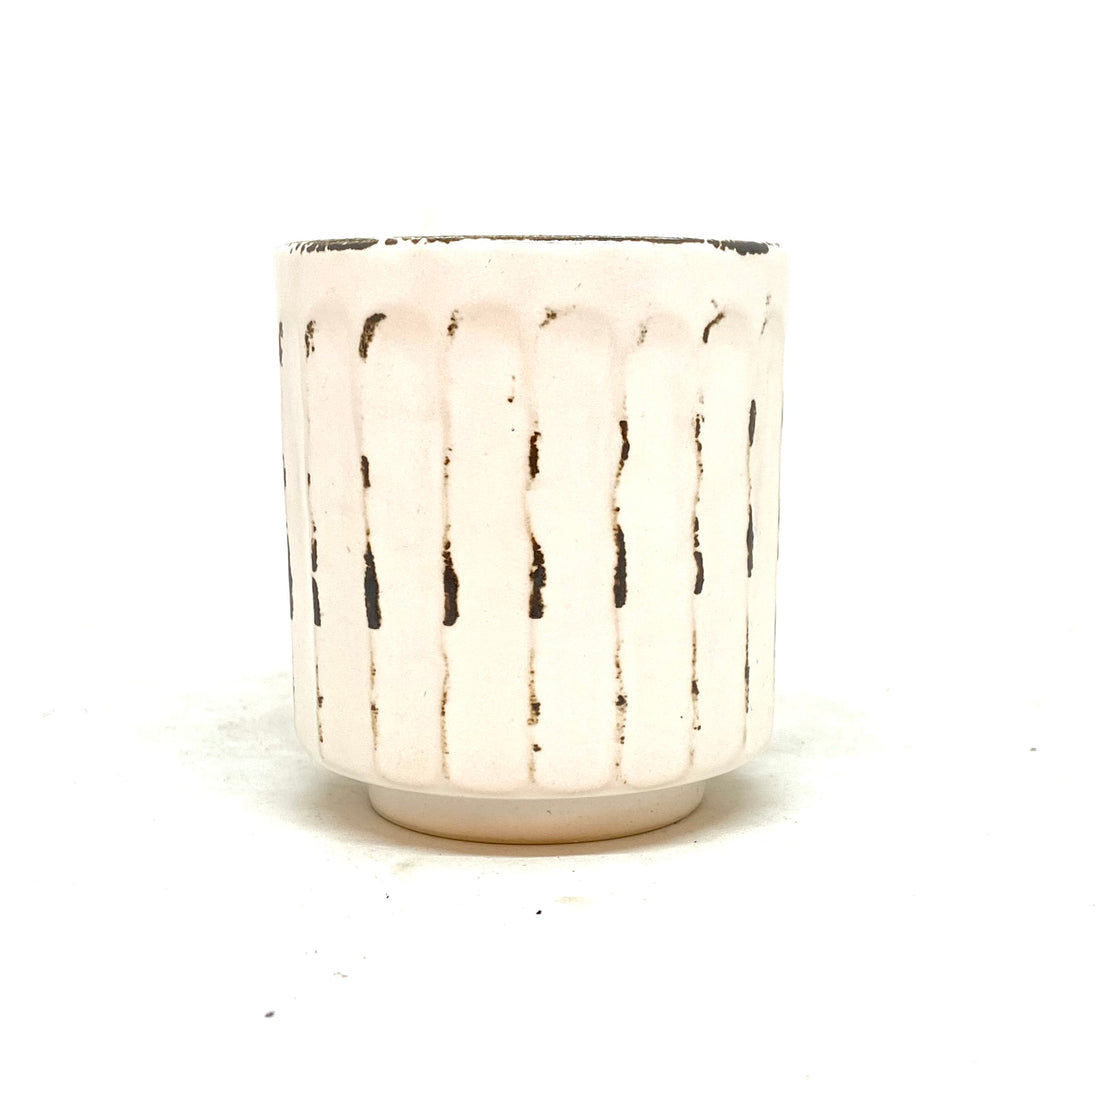 Japanese Tea Cup - Speckle Worn White